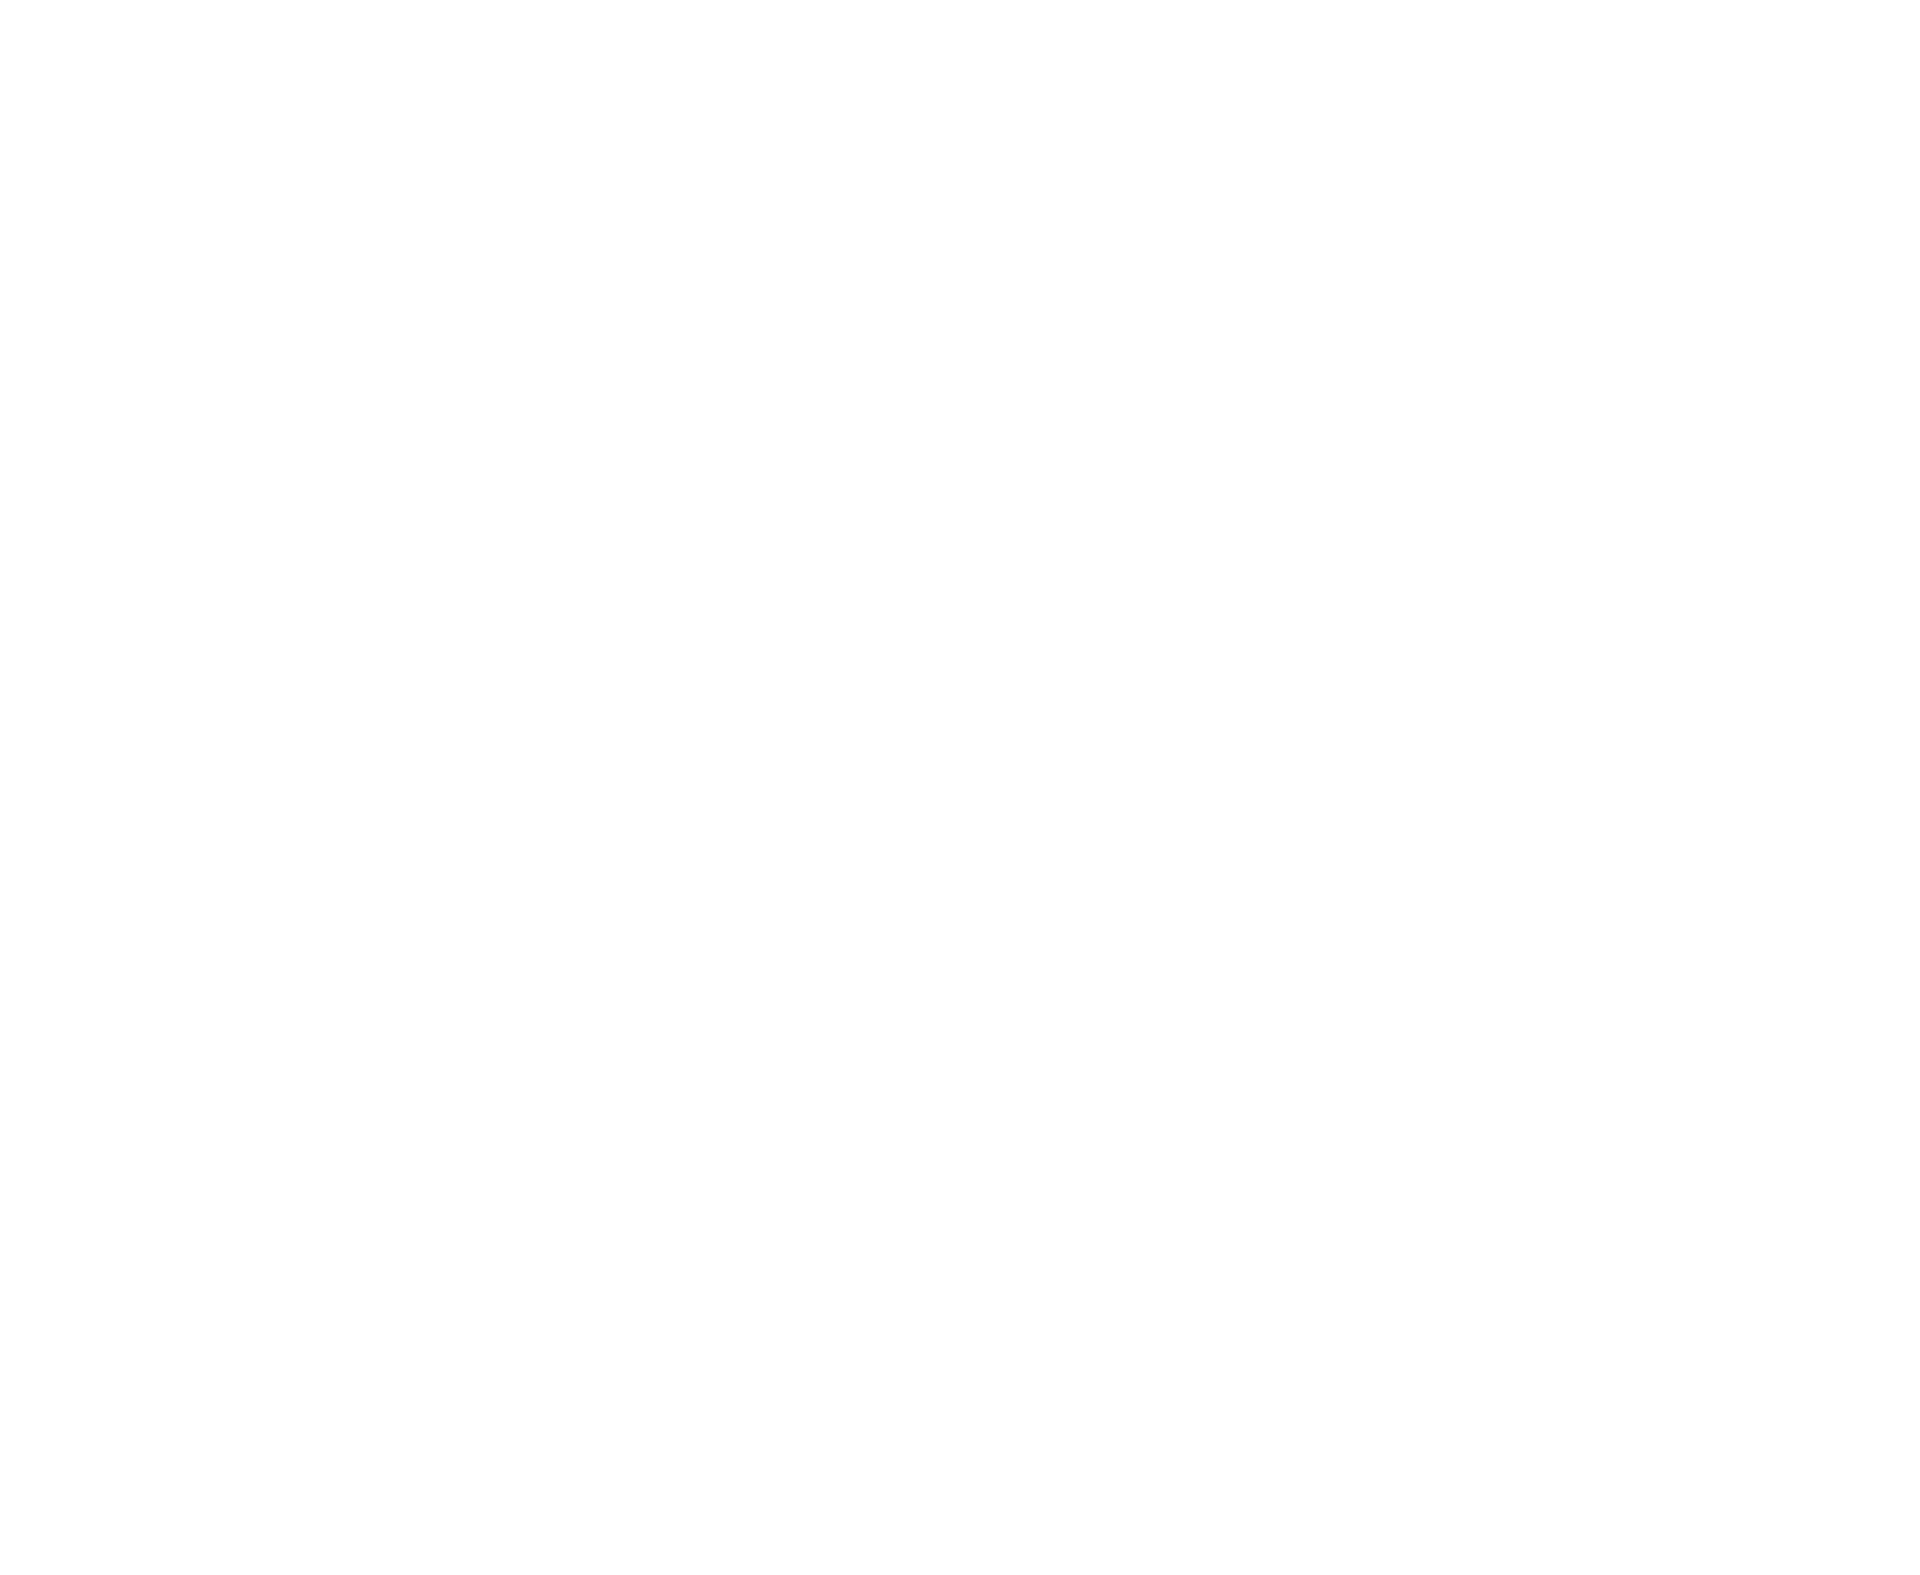 M&G Group logo